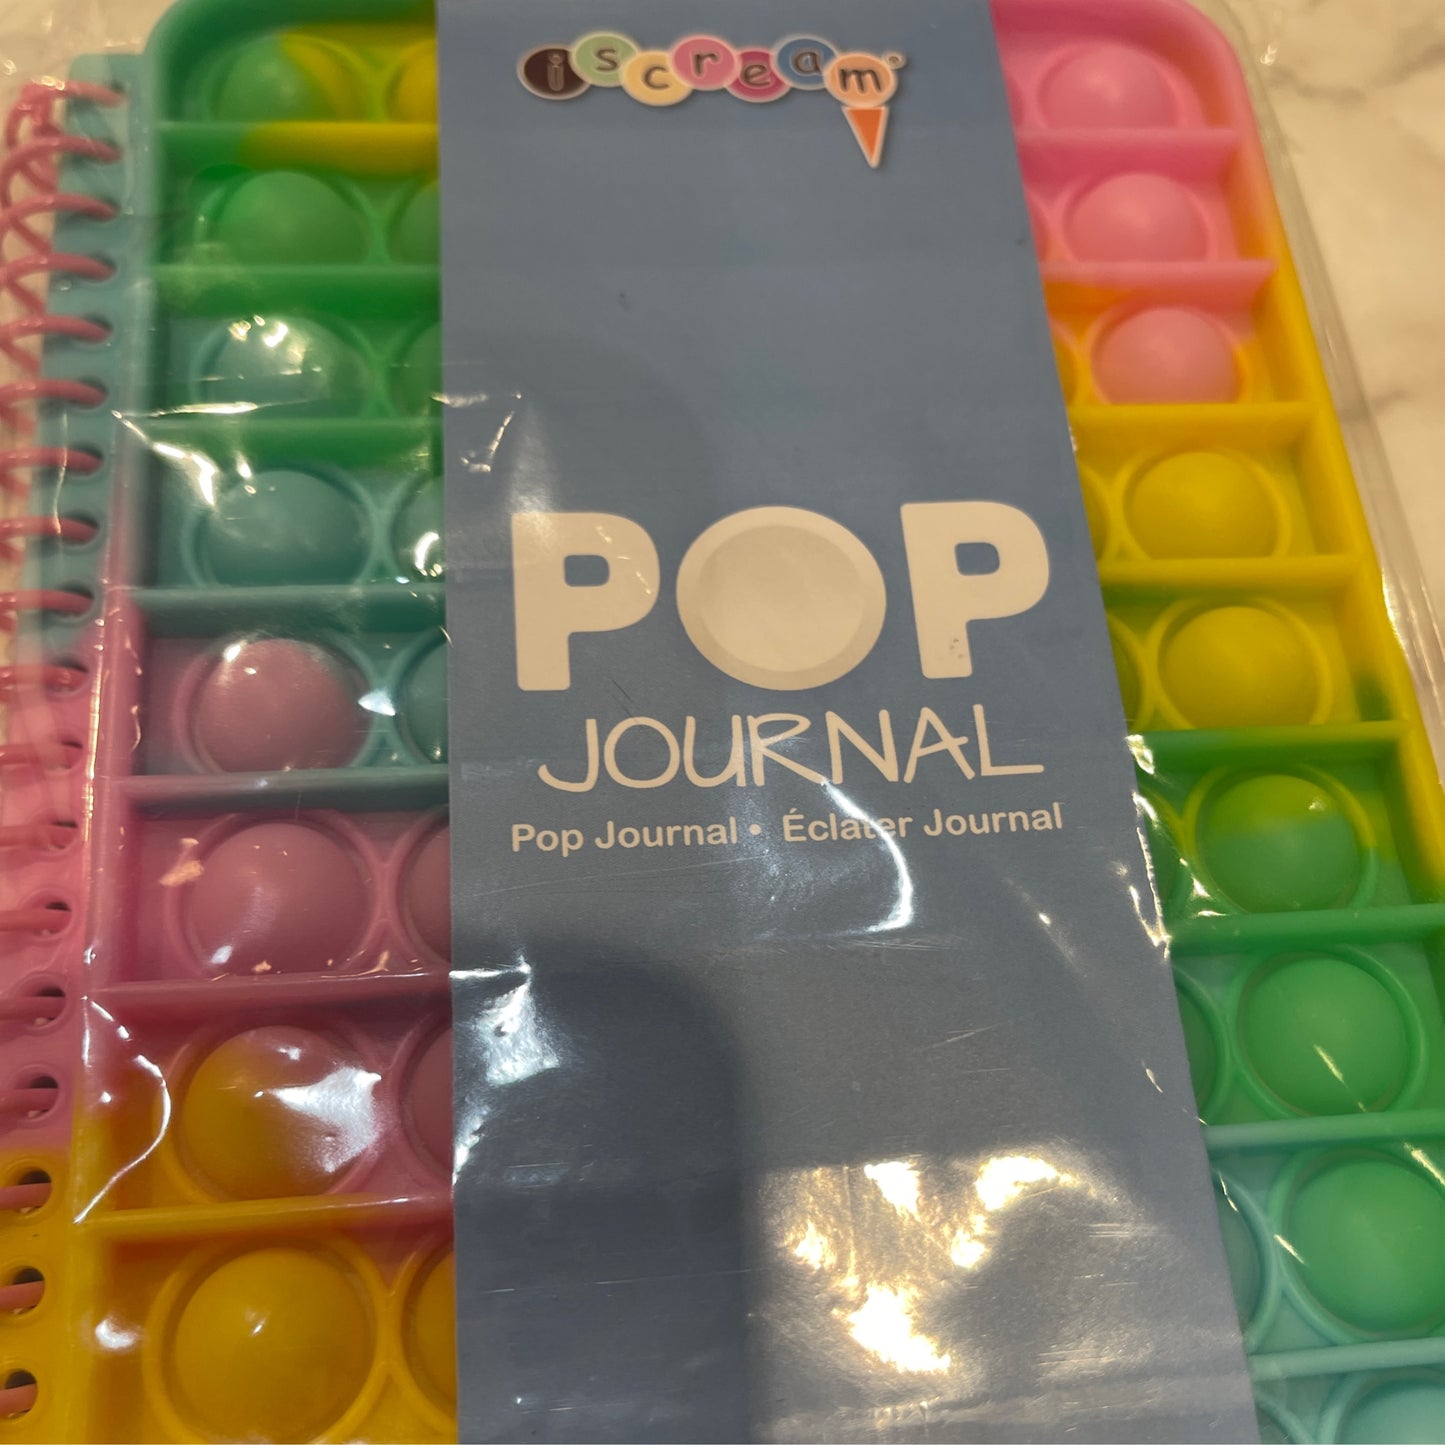 IScream pop journal